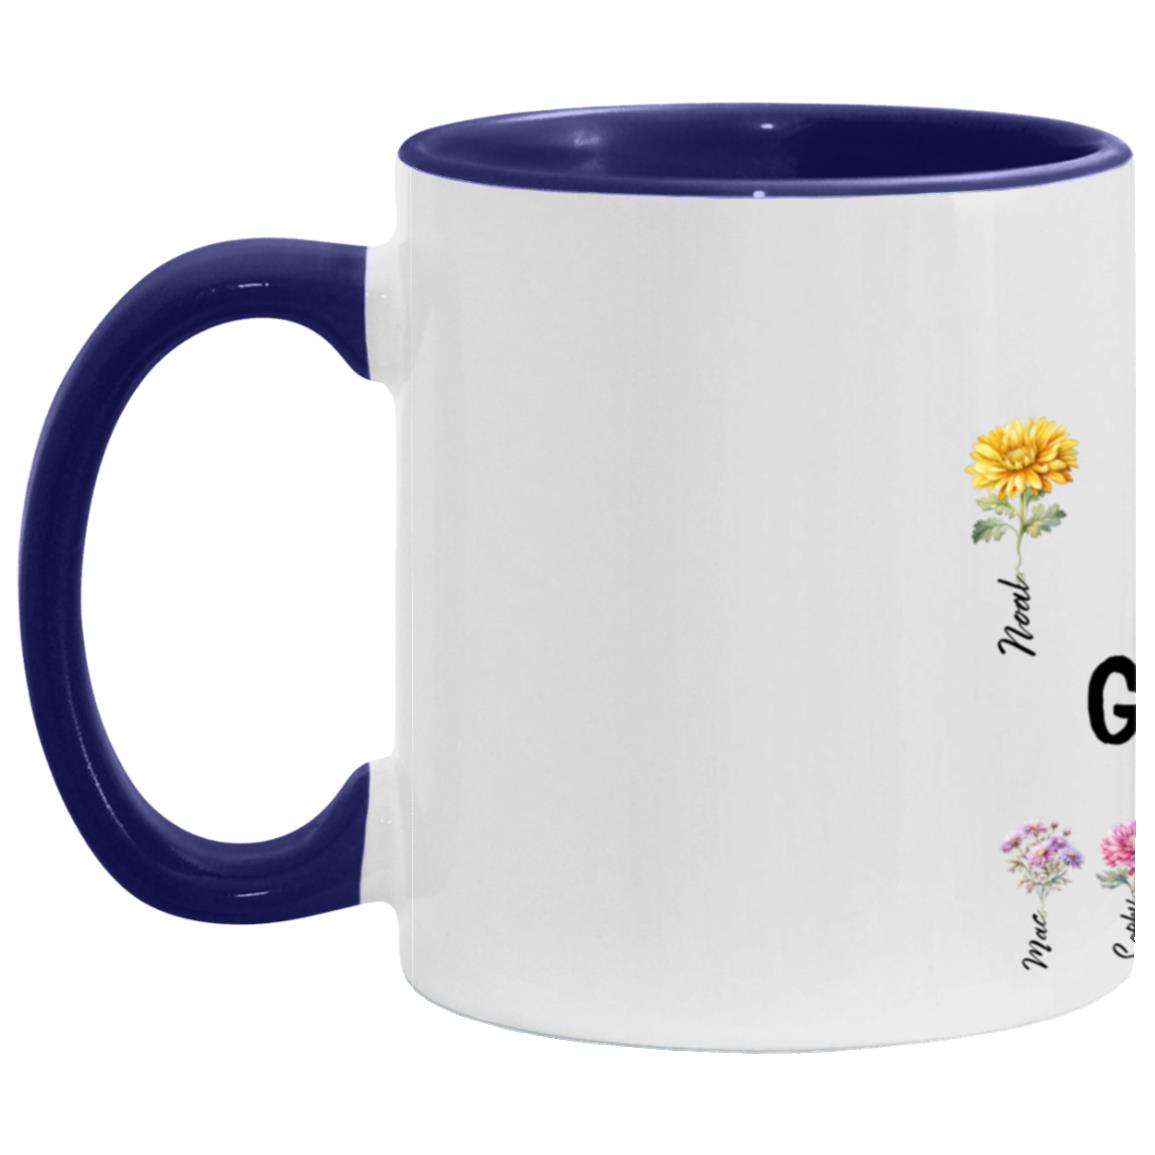 Mom/Grandma Est. Birth  Flowers 11oz Accent Mug